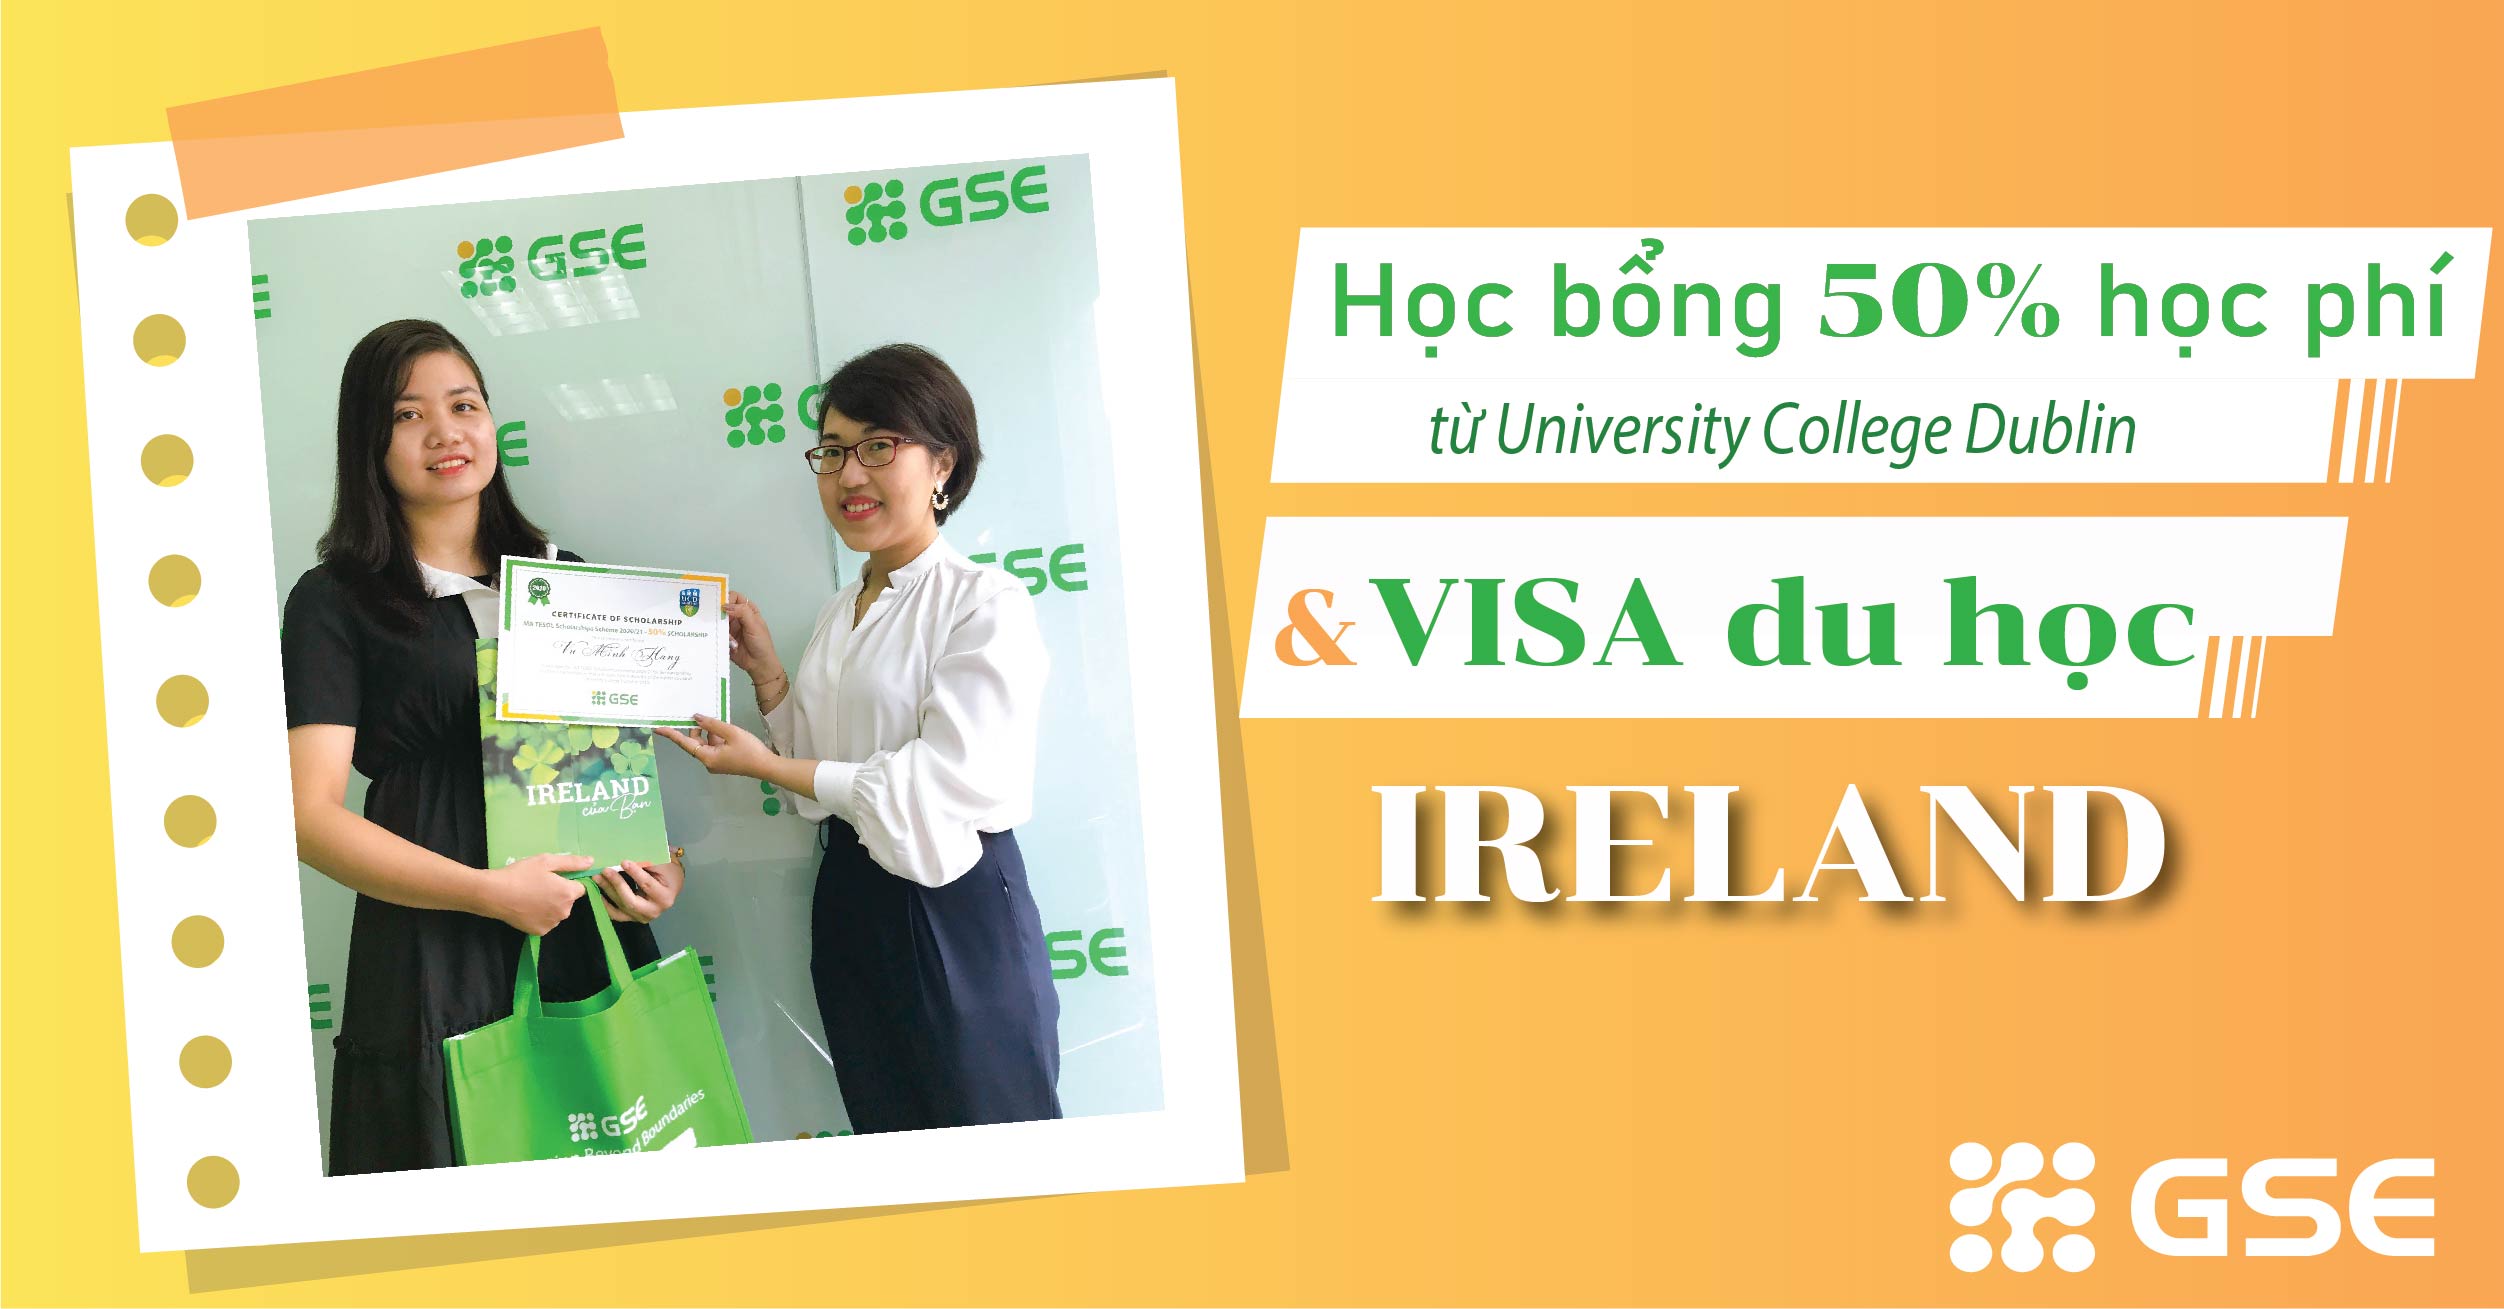 hoc-bong-ireland-visa-du-hoc-university-college-dublin-vu-minh-hang